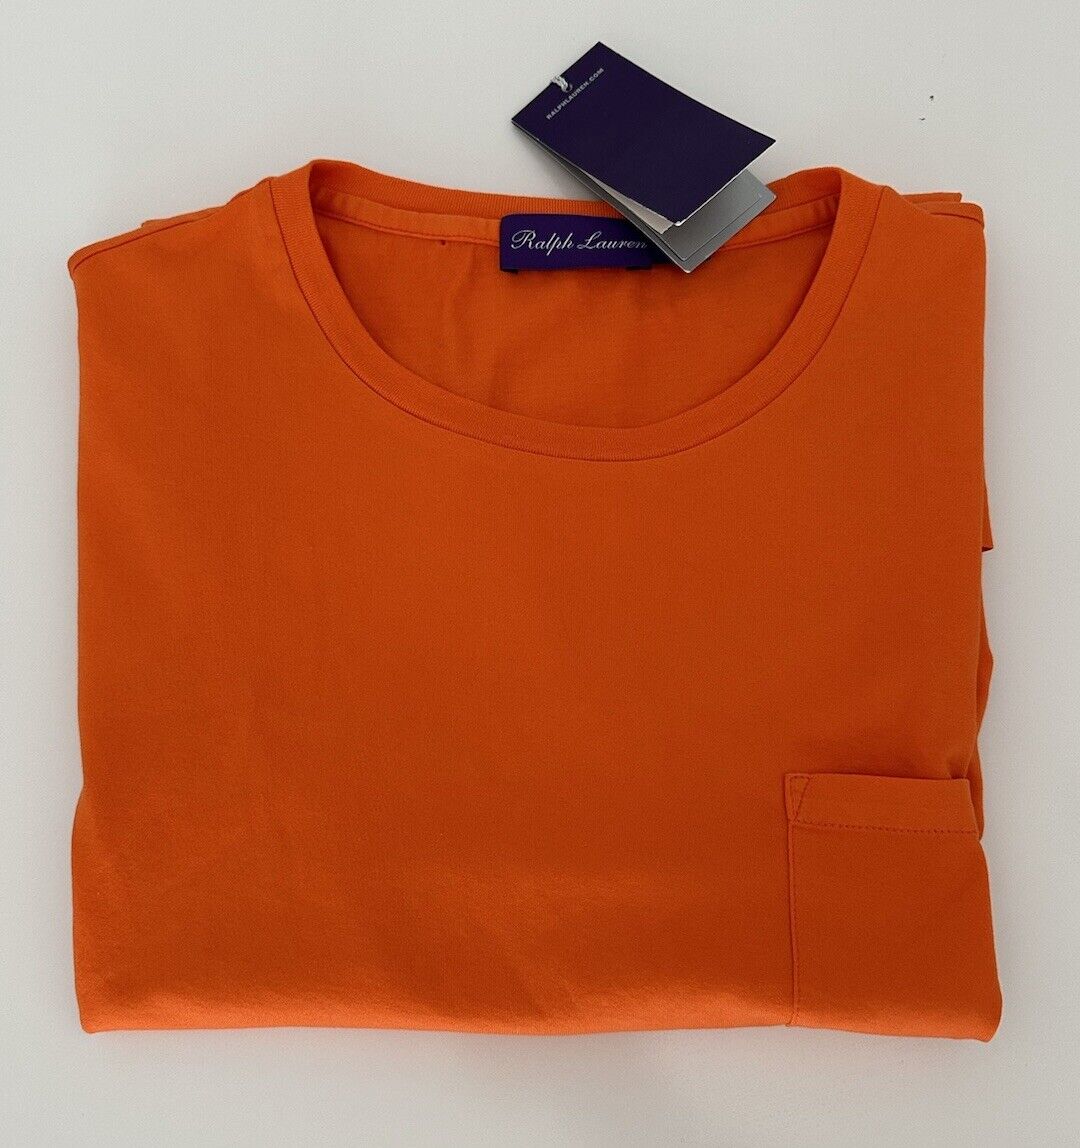 Ralph Lauren Purple Label Orange Cotton Jersey T-Shirt 2XL NWT $195